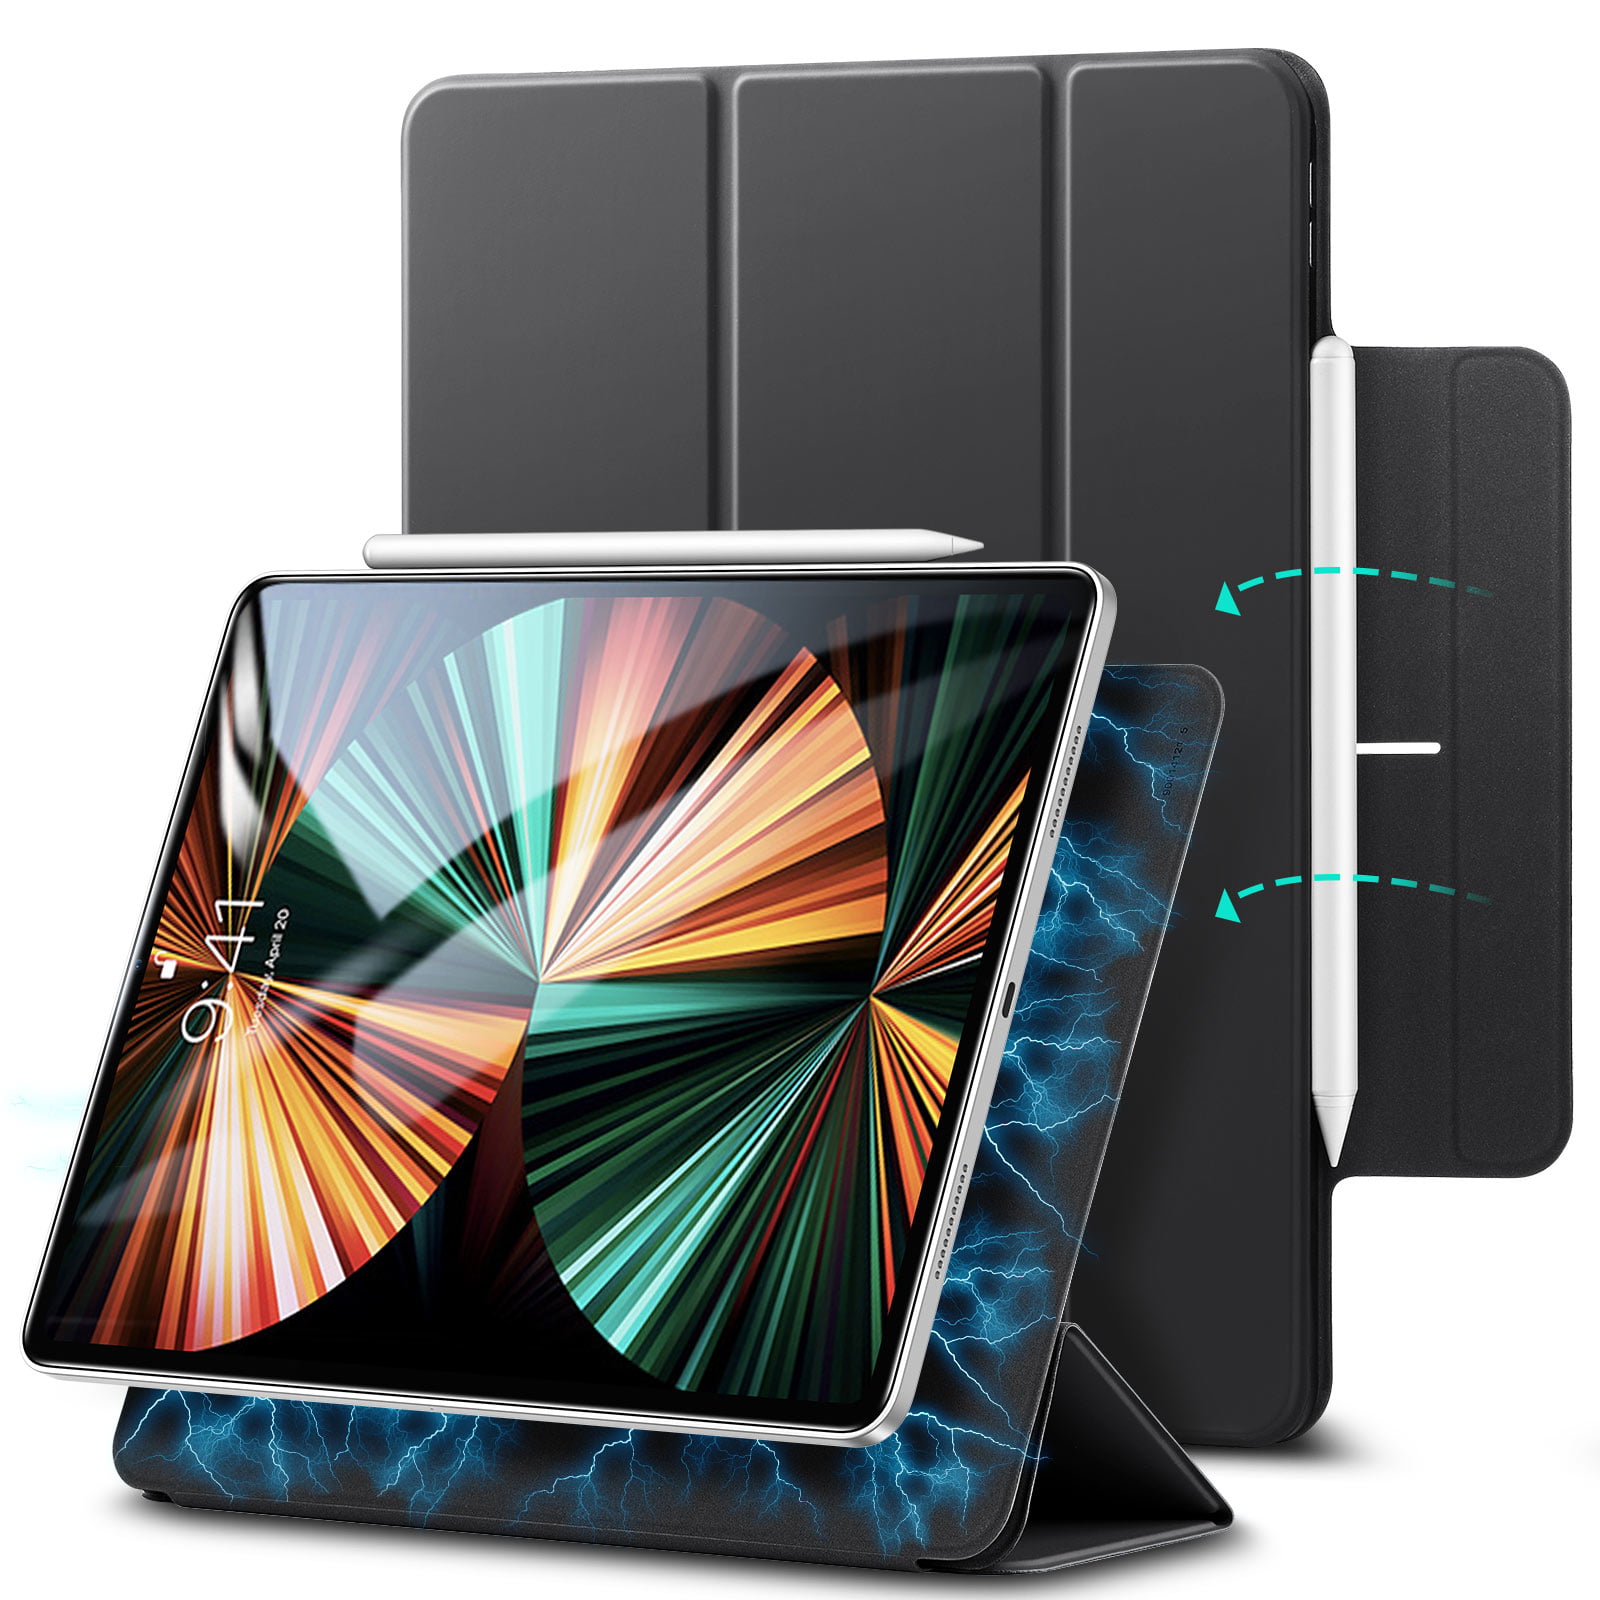 2021 Apple 12.9-inch iPad Pro Wi-Fi 256GB - Silver (5th Generation 